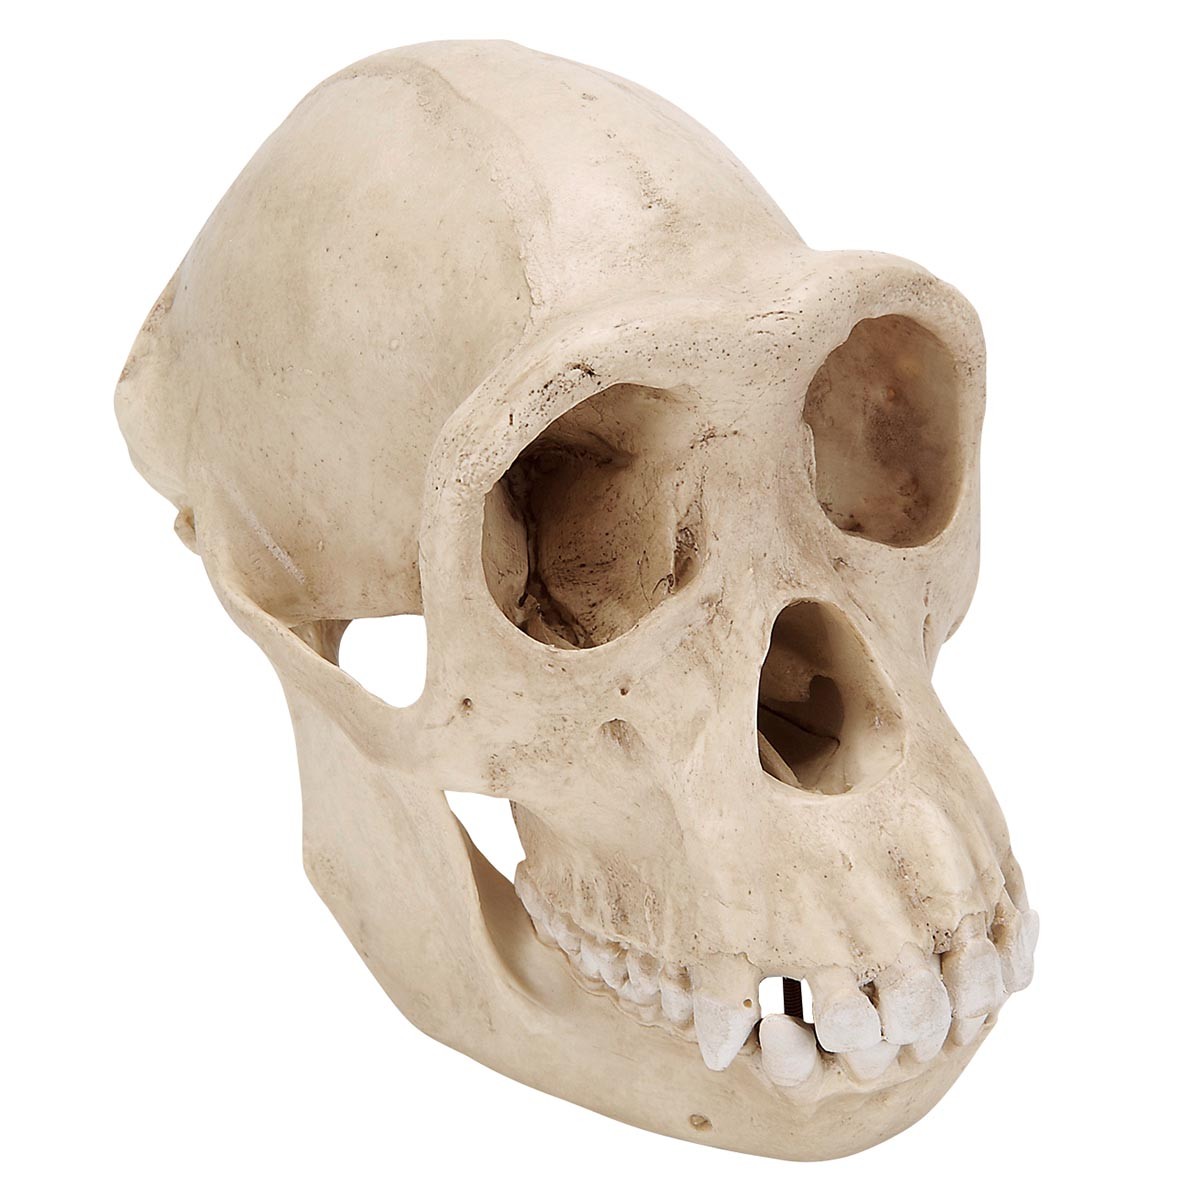 img310 Kostry, lebky: Biologická antropologie - lebka šimpanze (Pan troglodytes), samice, replika